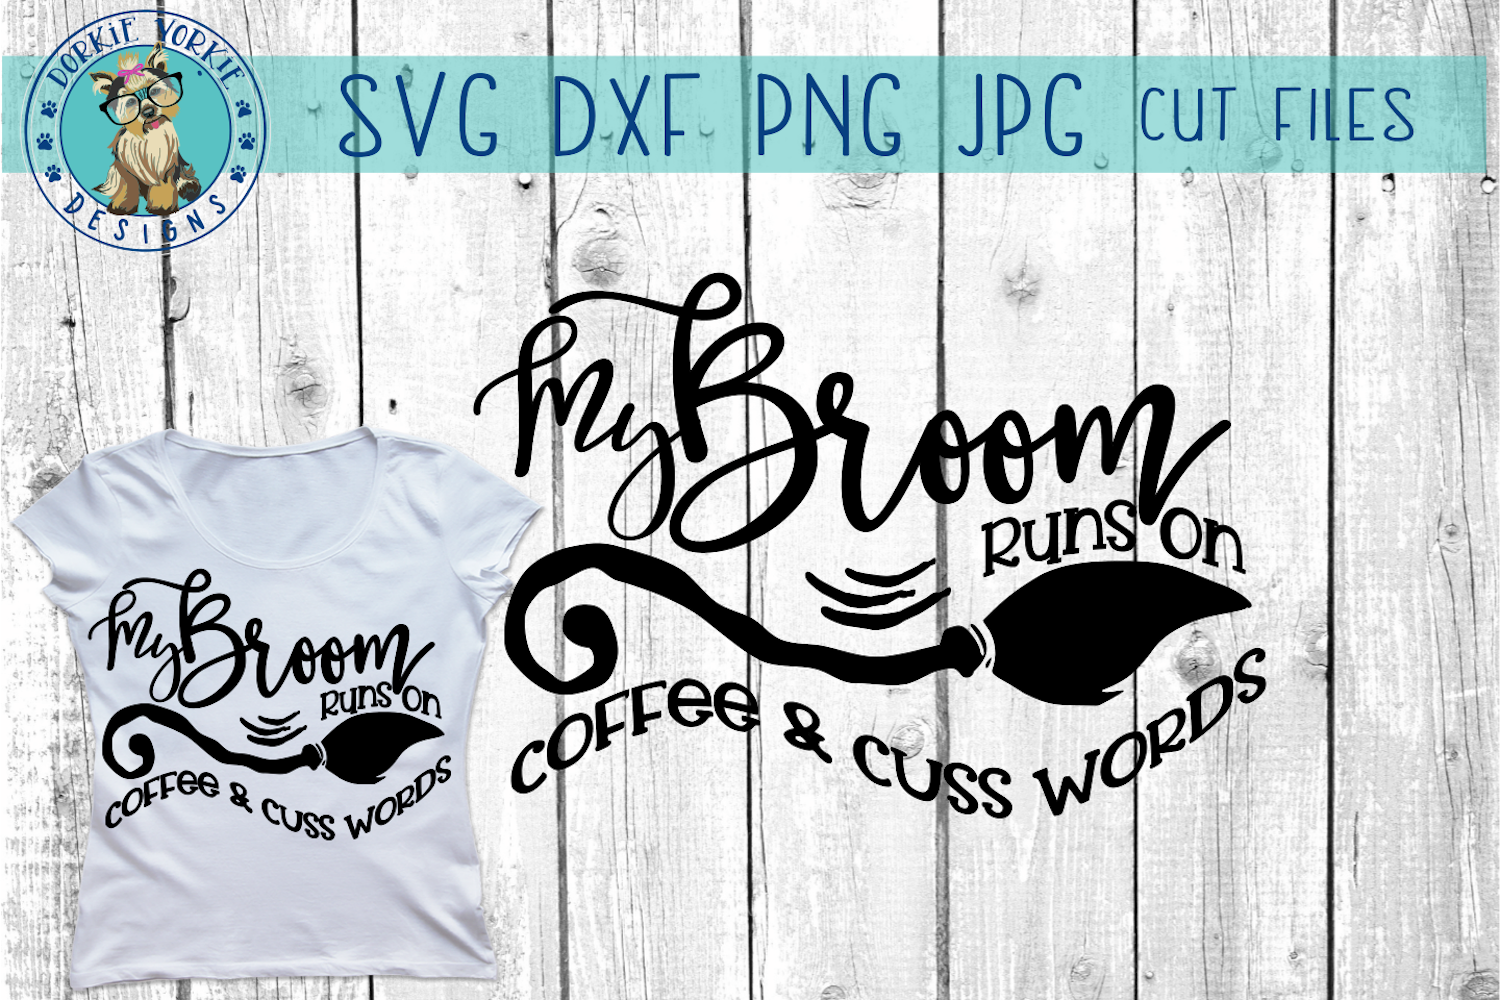 My Broom runs on Coffee & Cuss - Halloween - Witch - SVG Cut (132004) | SVGs | Design Bundles